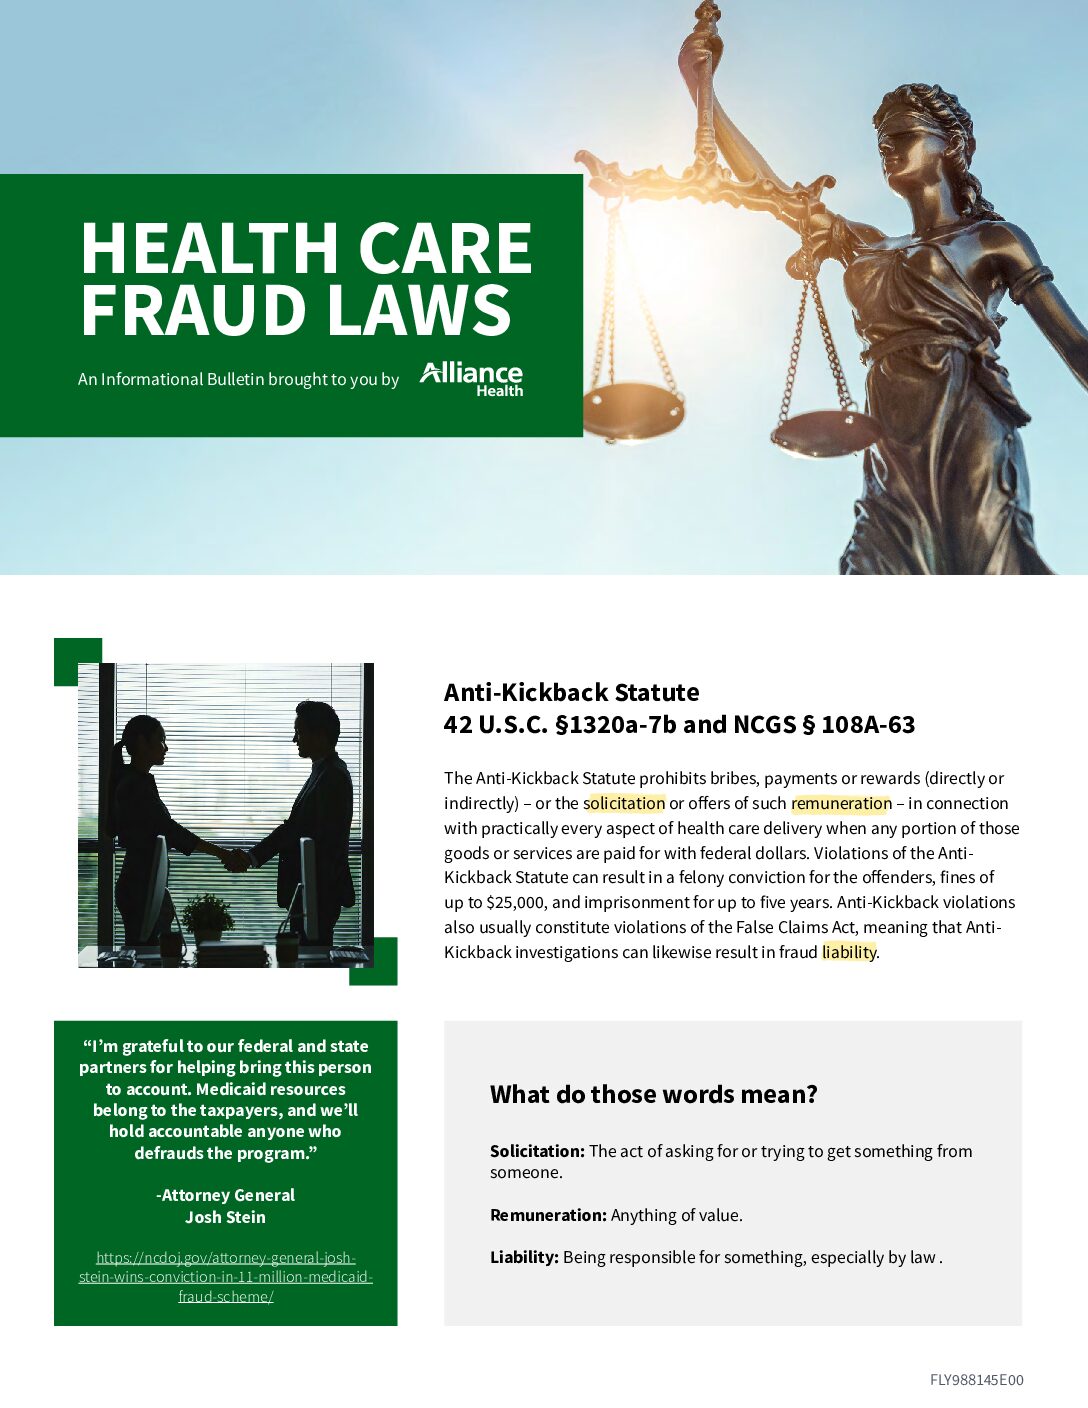 Health Care Fraud Bulletin: Anti-Kickback Statute